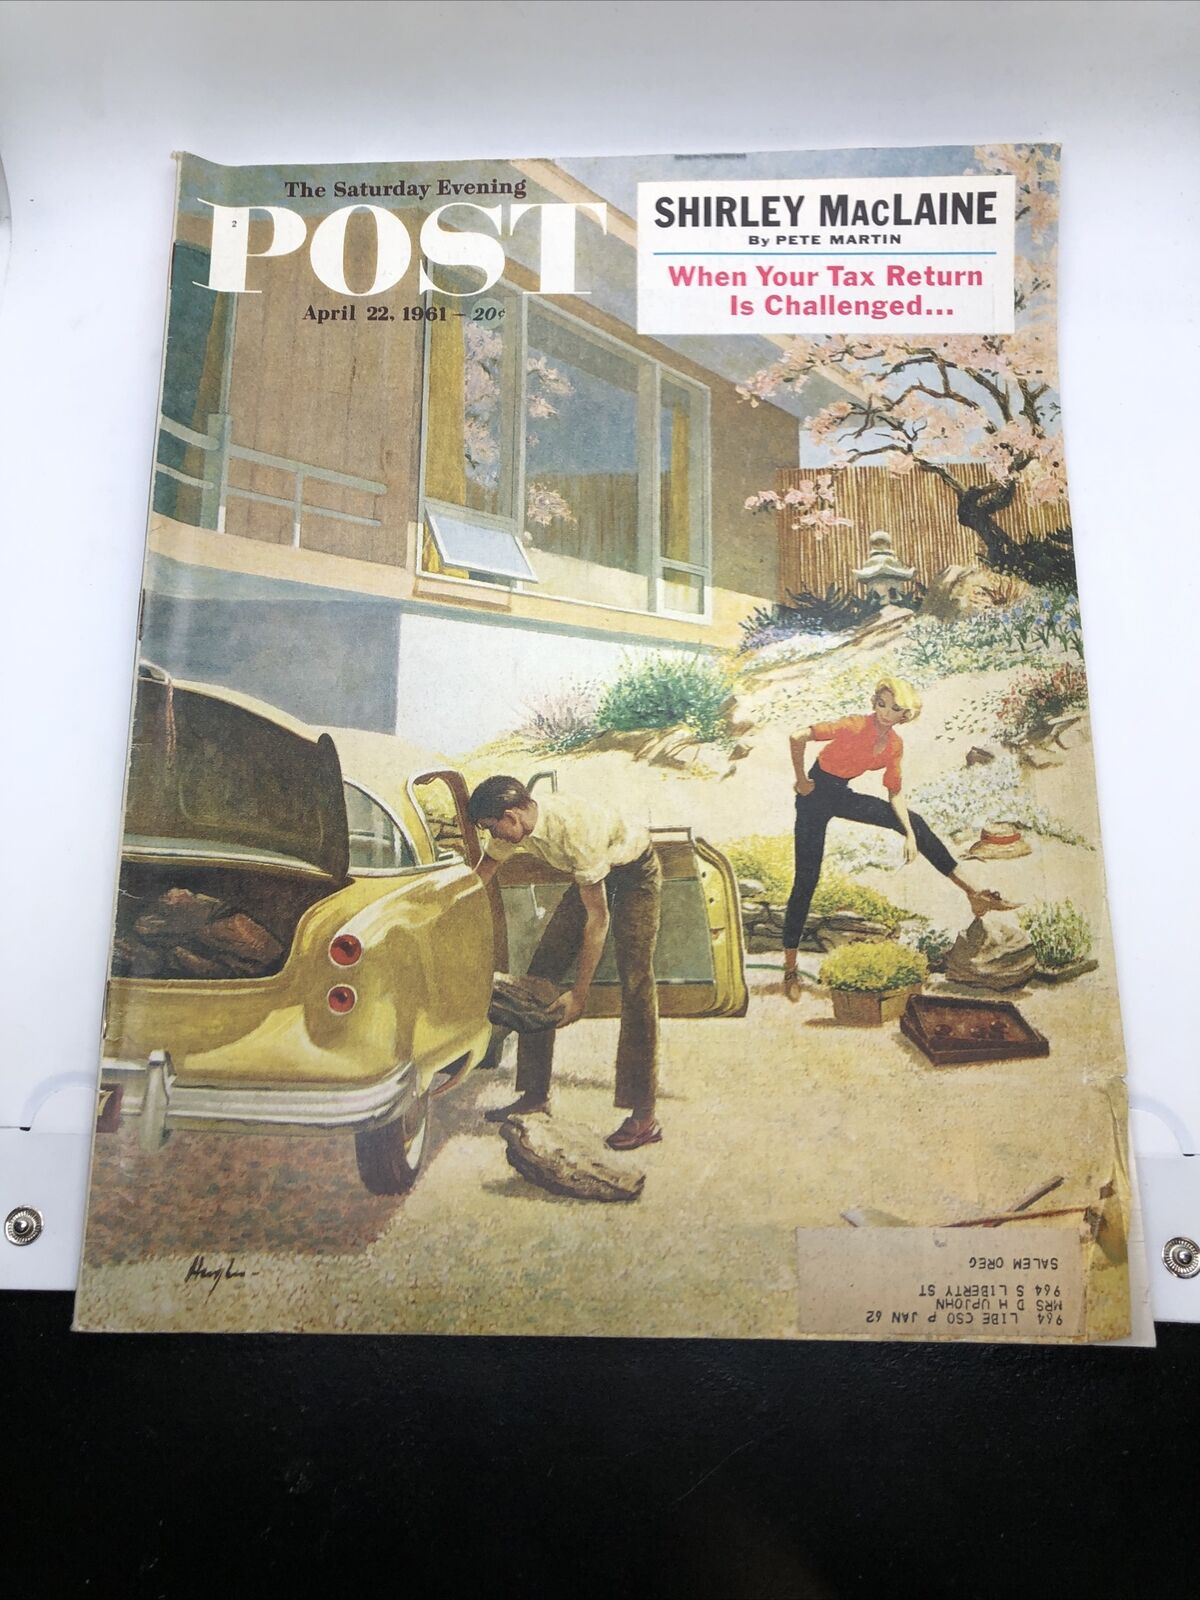  Vintage April 22, 1961 Saturday Evening Post Magazine 